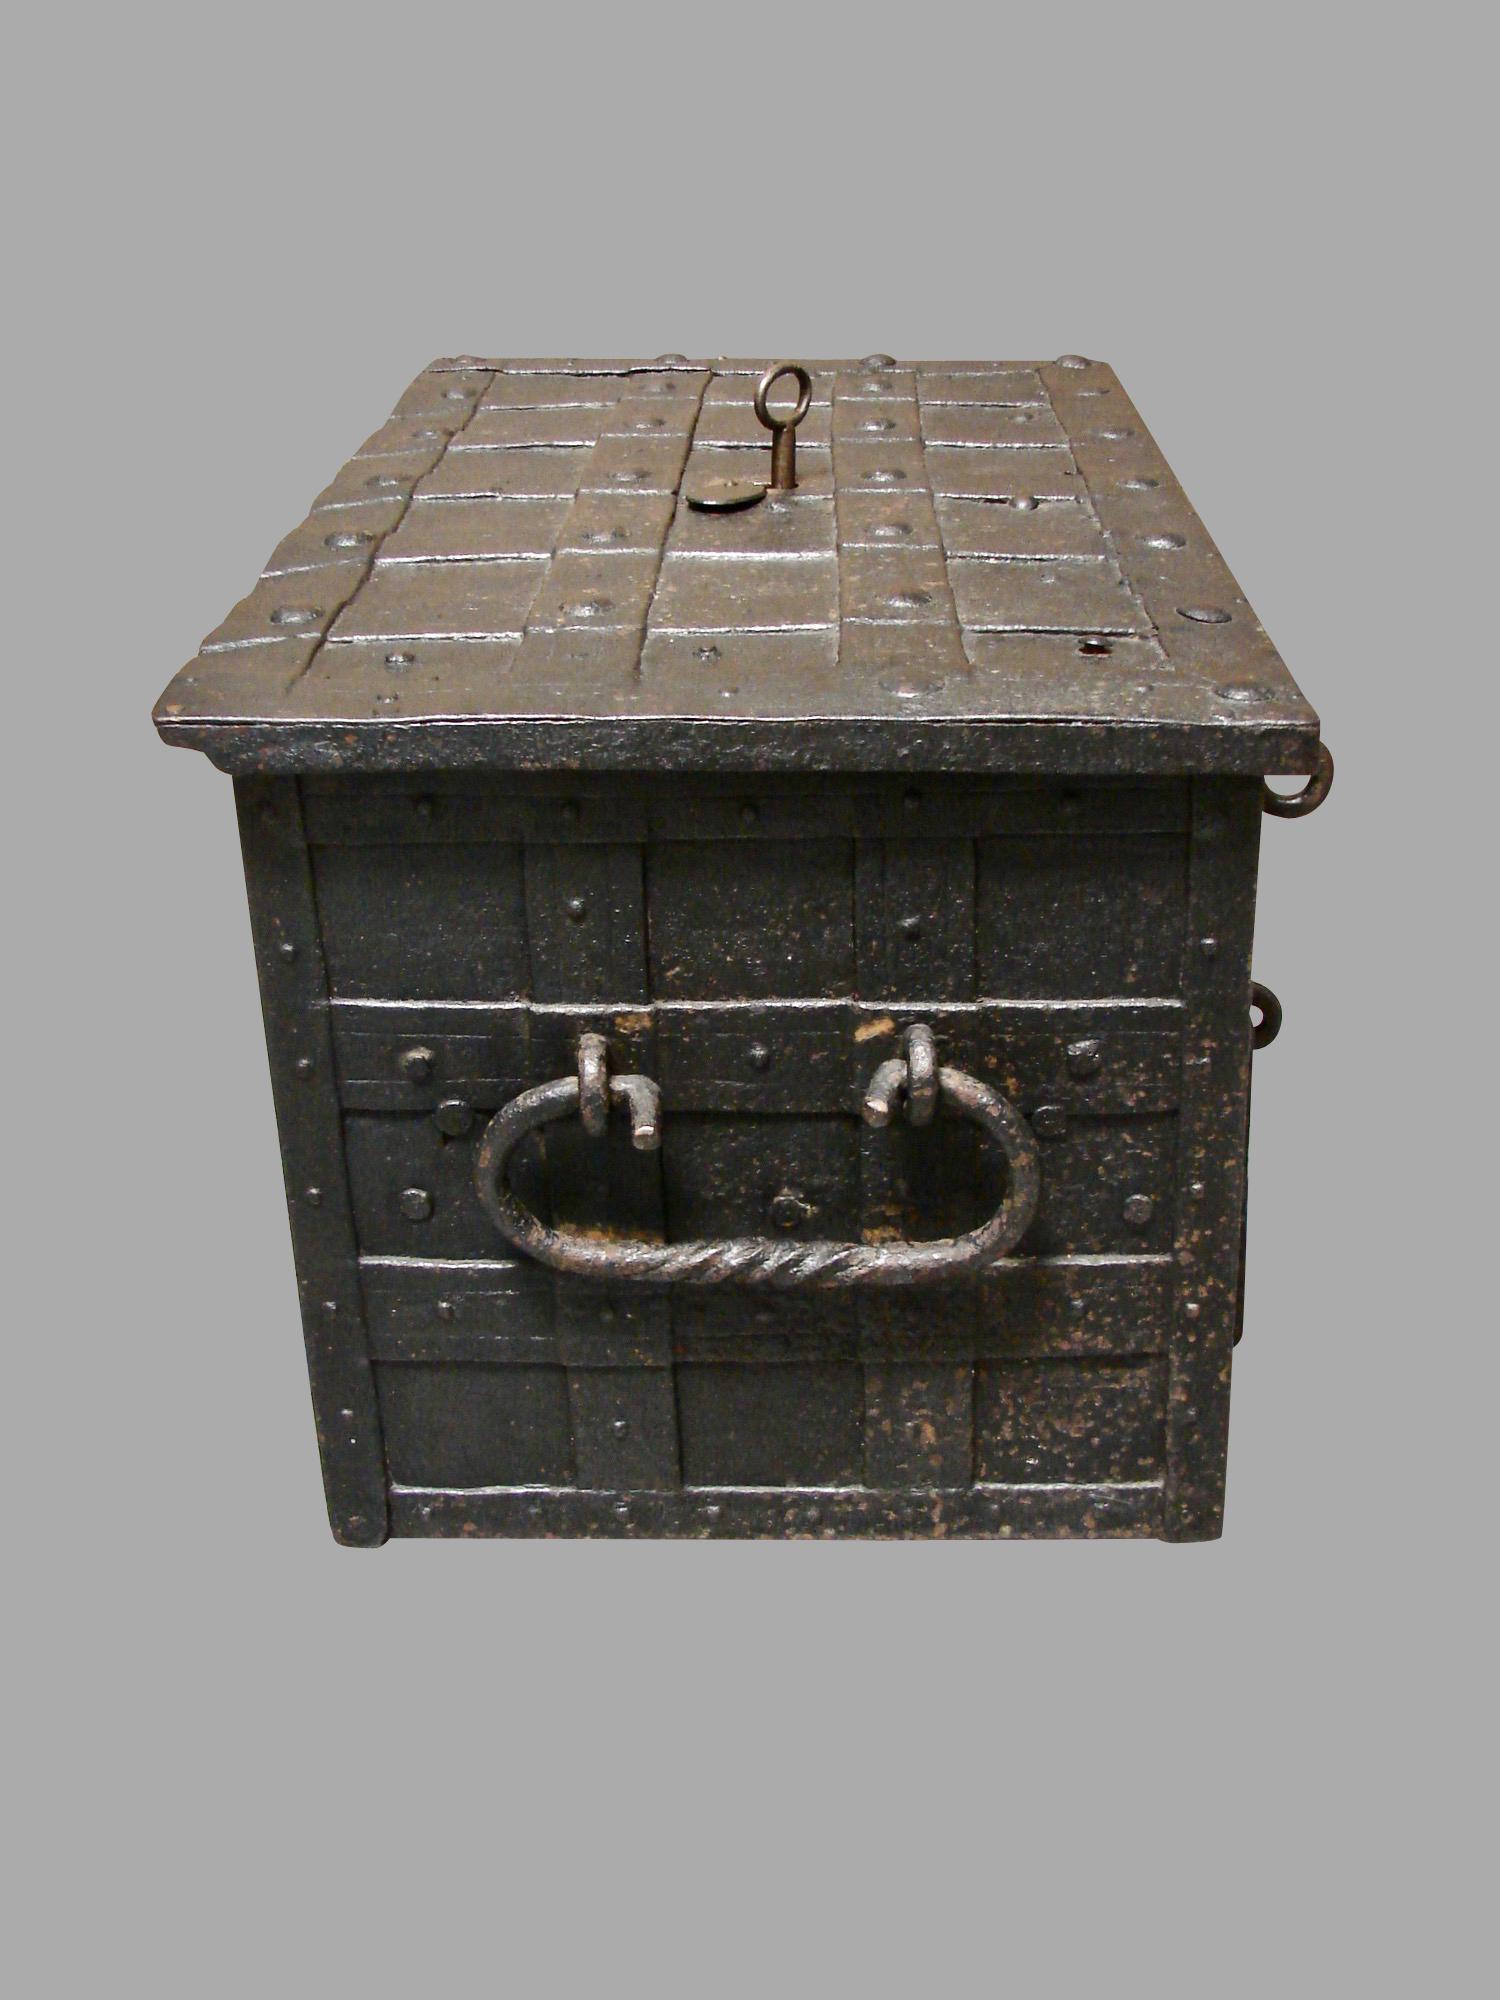 17th century box iron